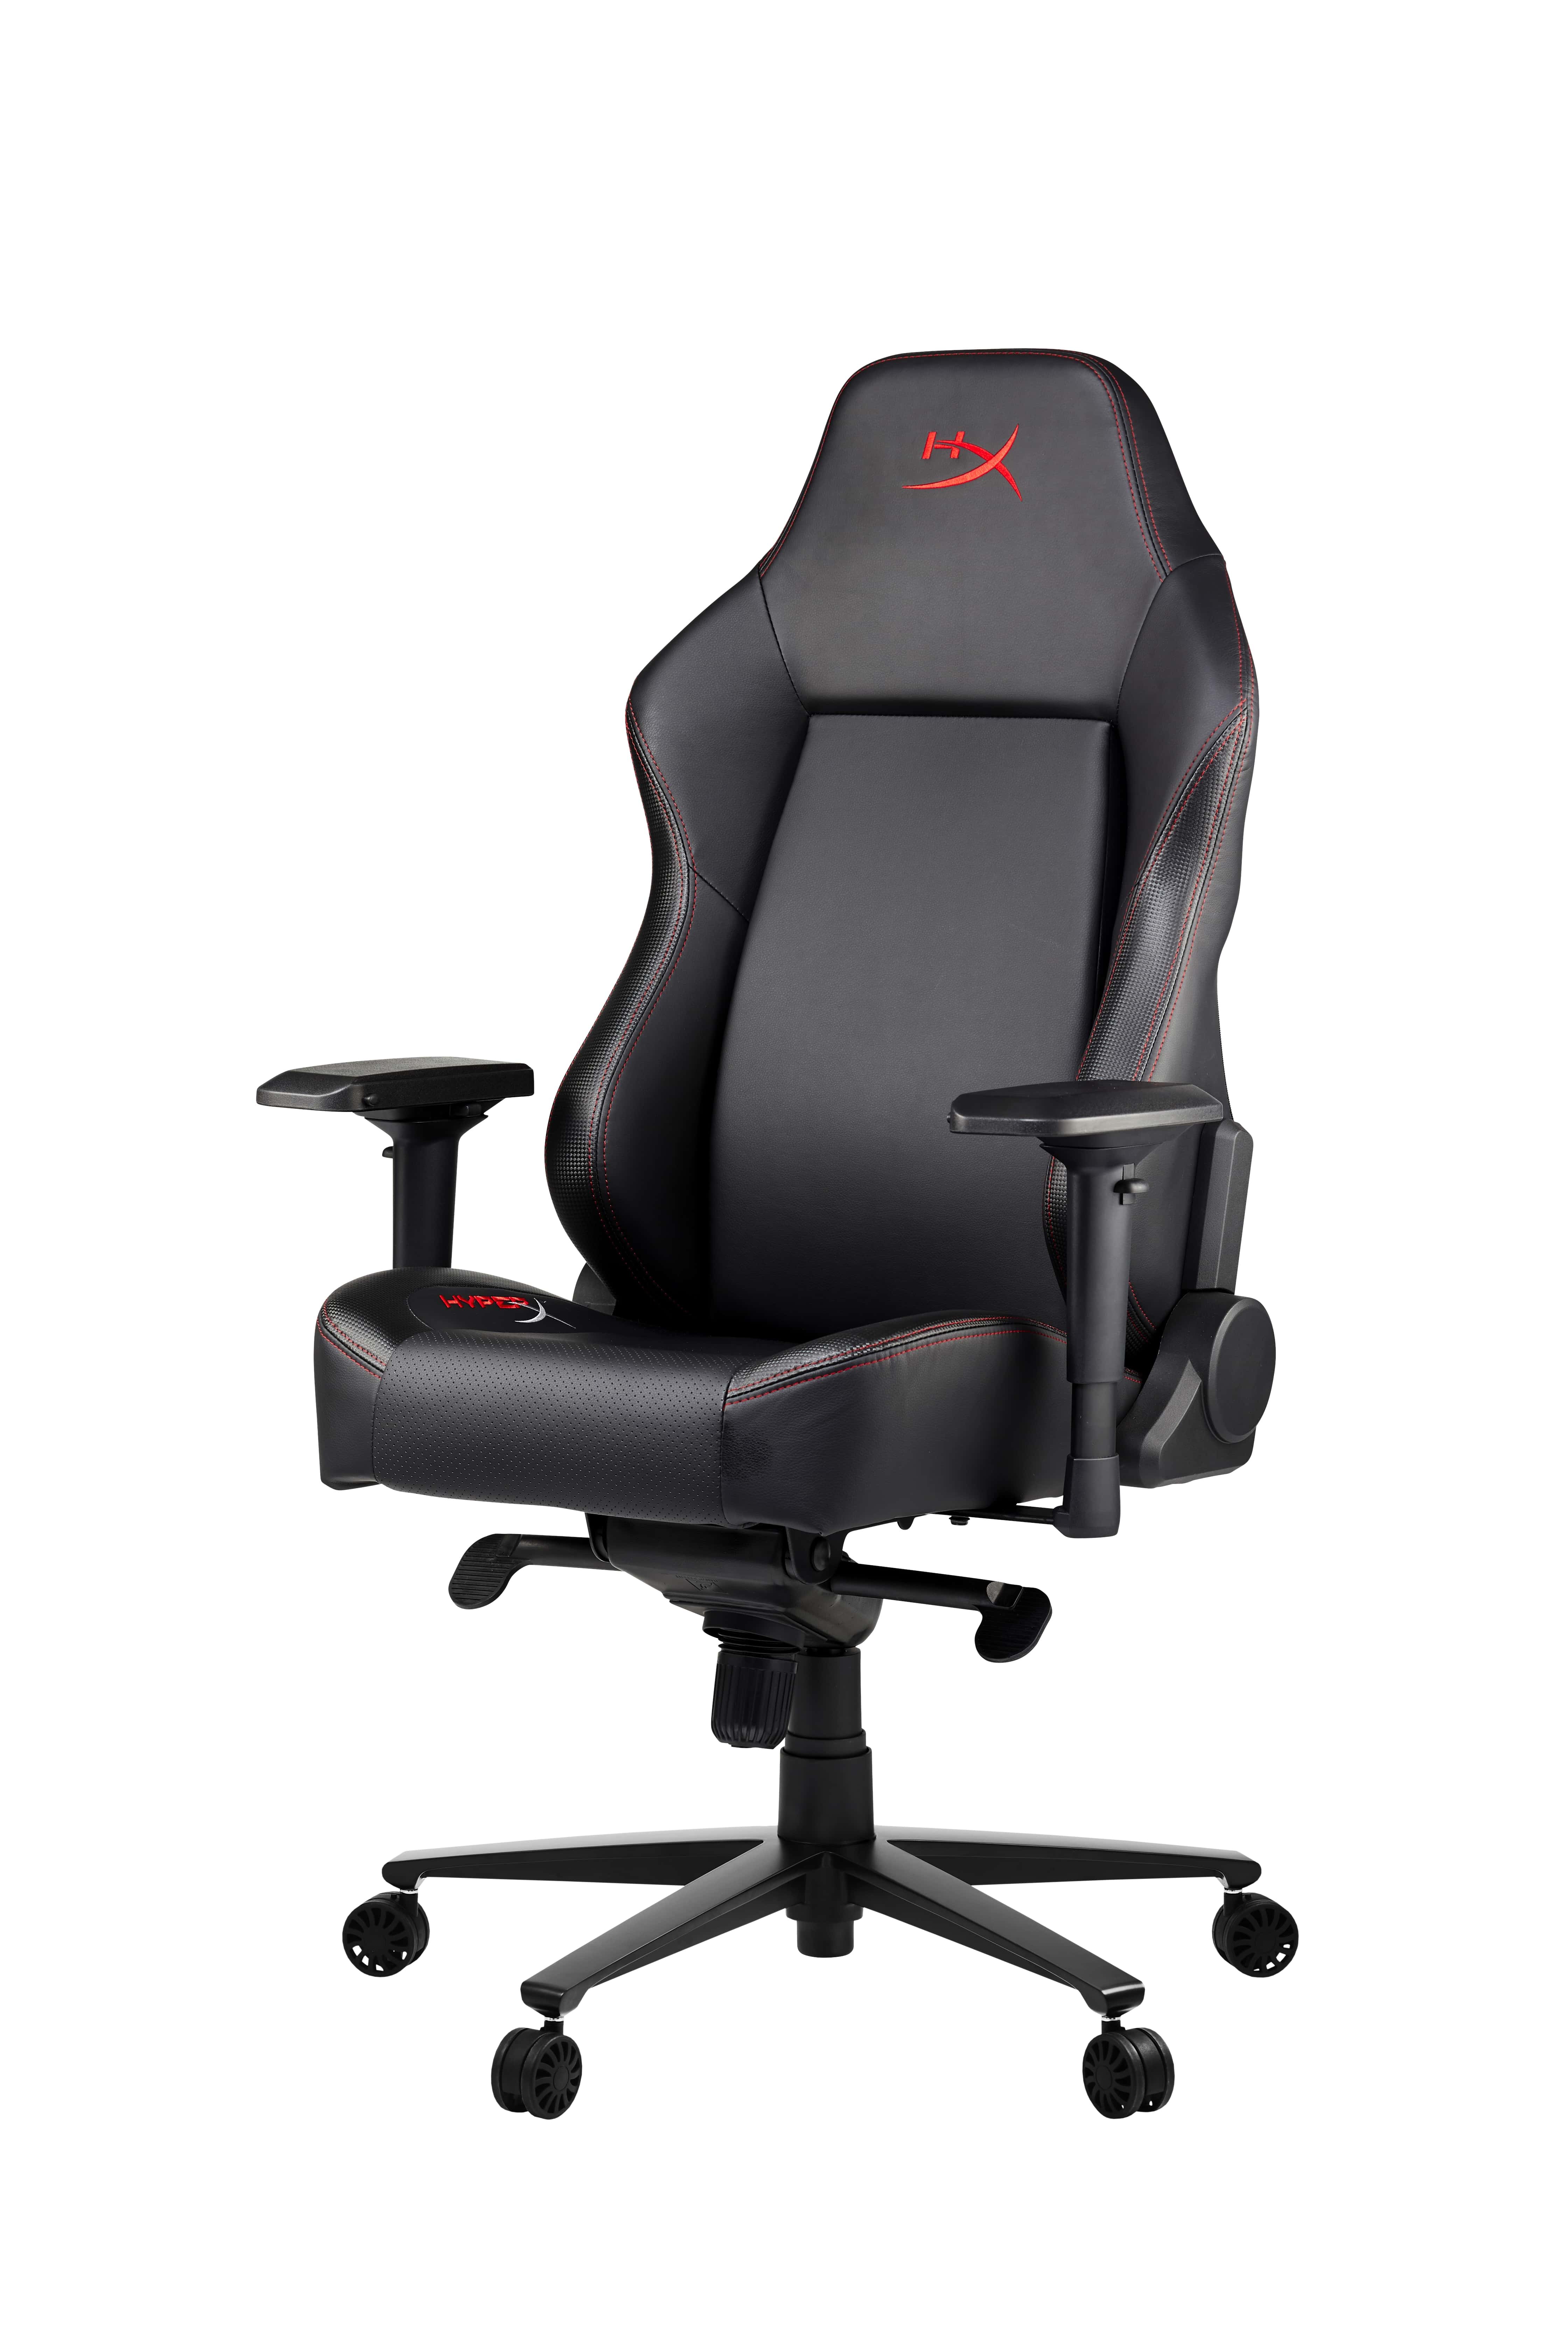 HyperX STEALTH gaming chair